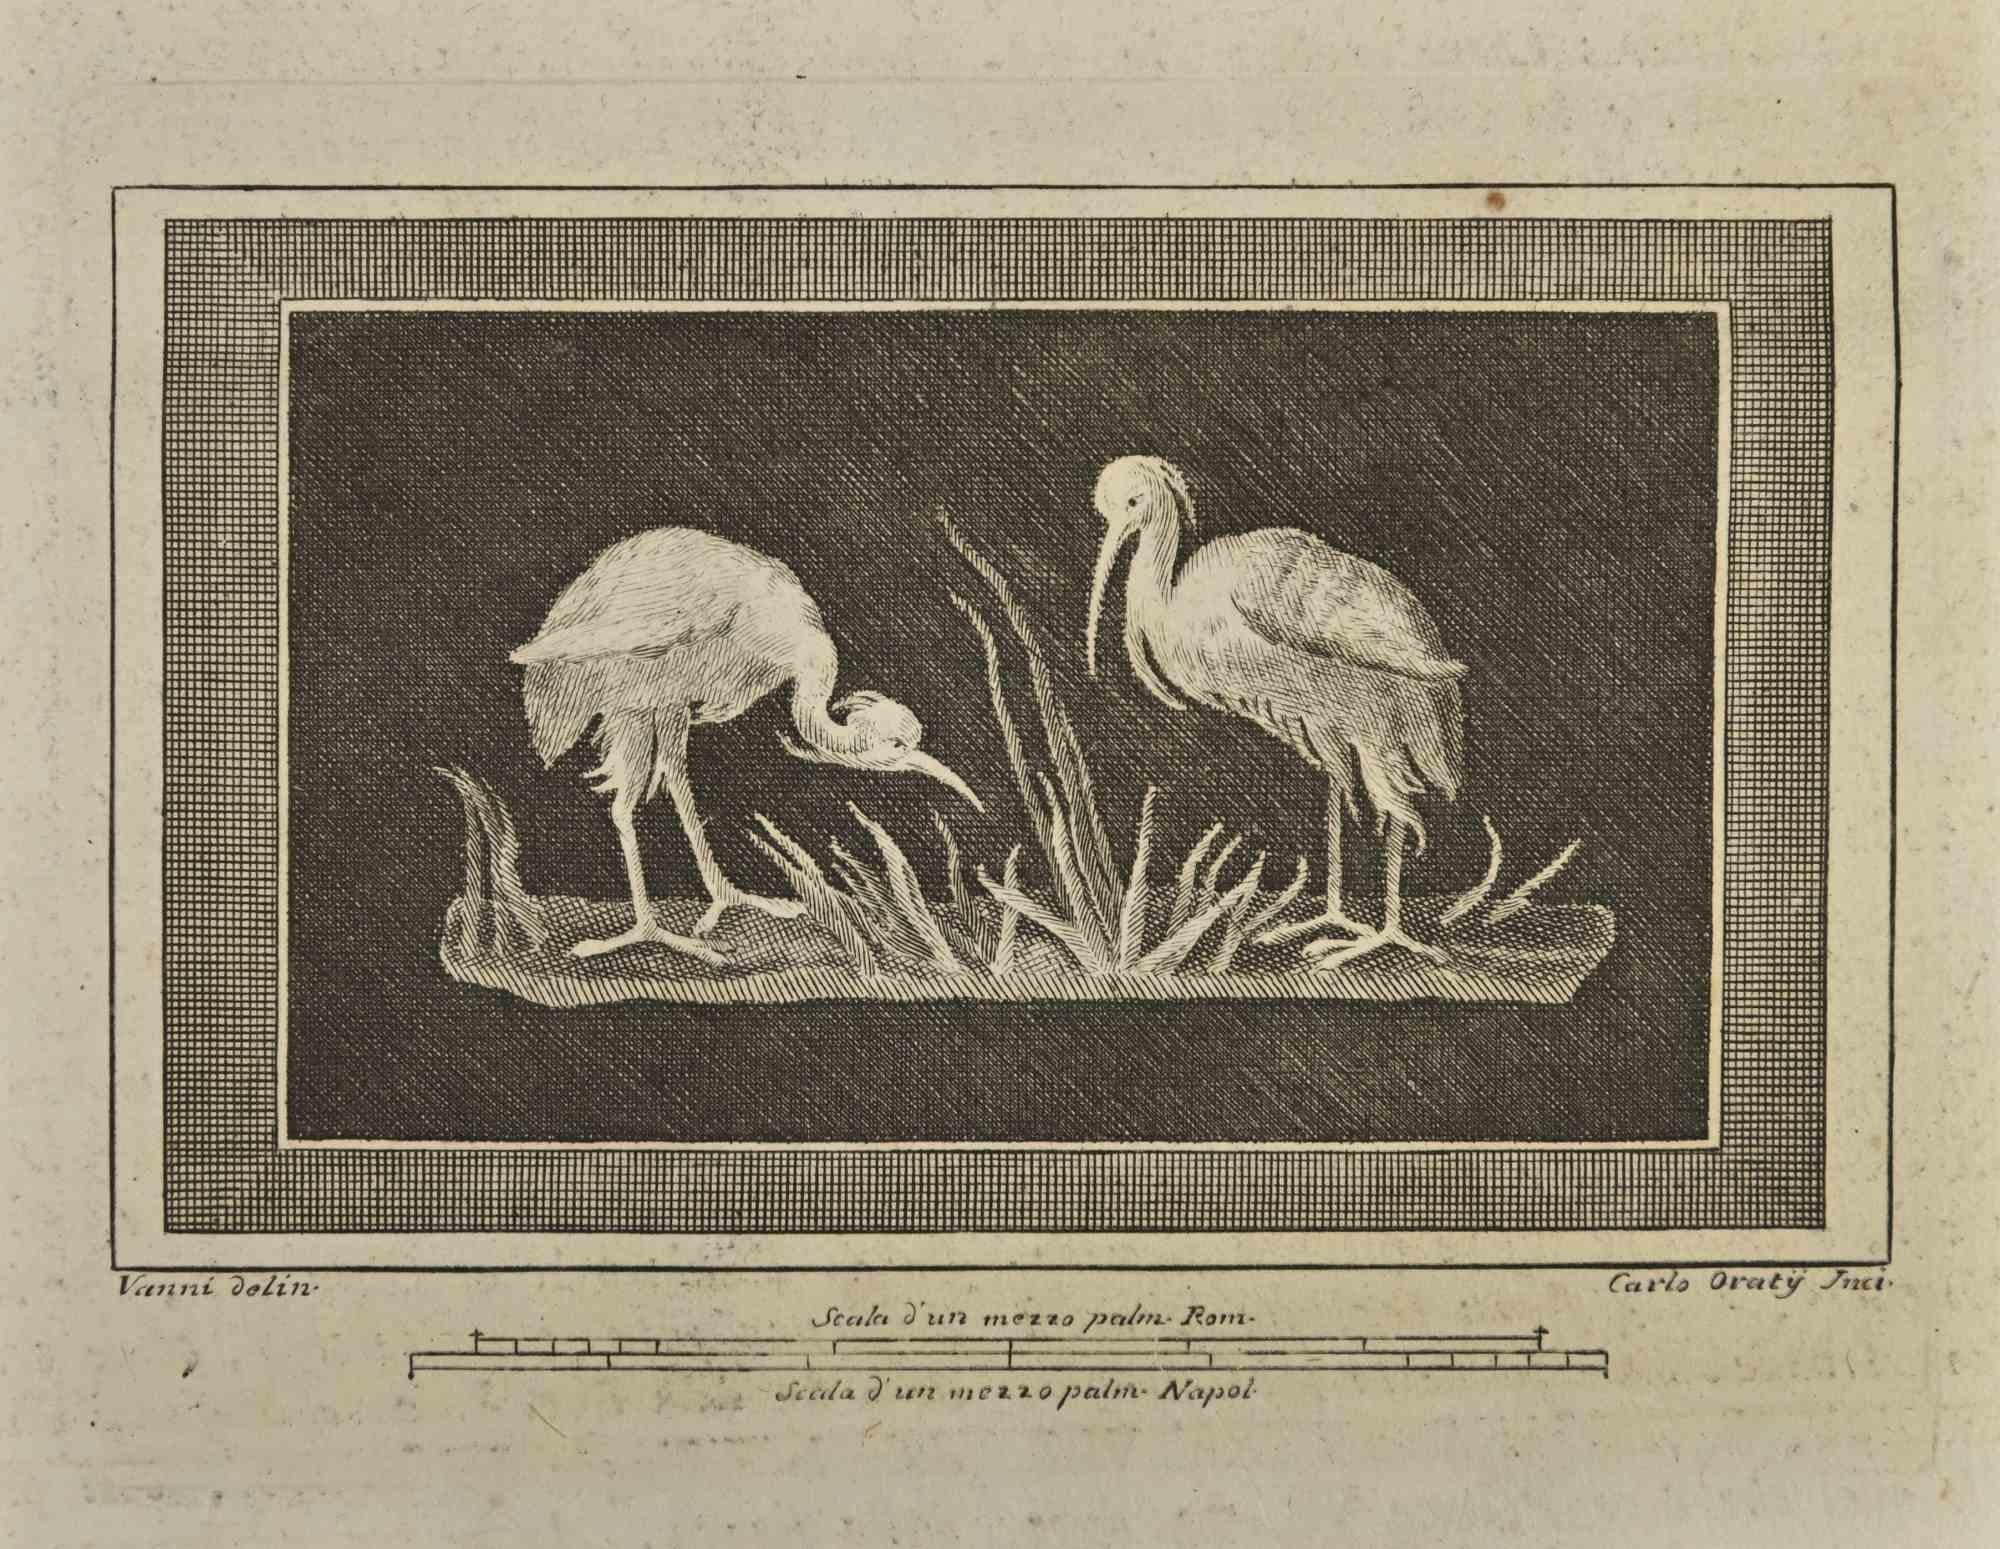 Carlo Oratij Figurative Print - Birds Of Hercolaneum - Etching - 18th Century